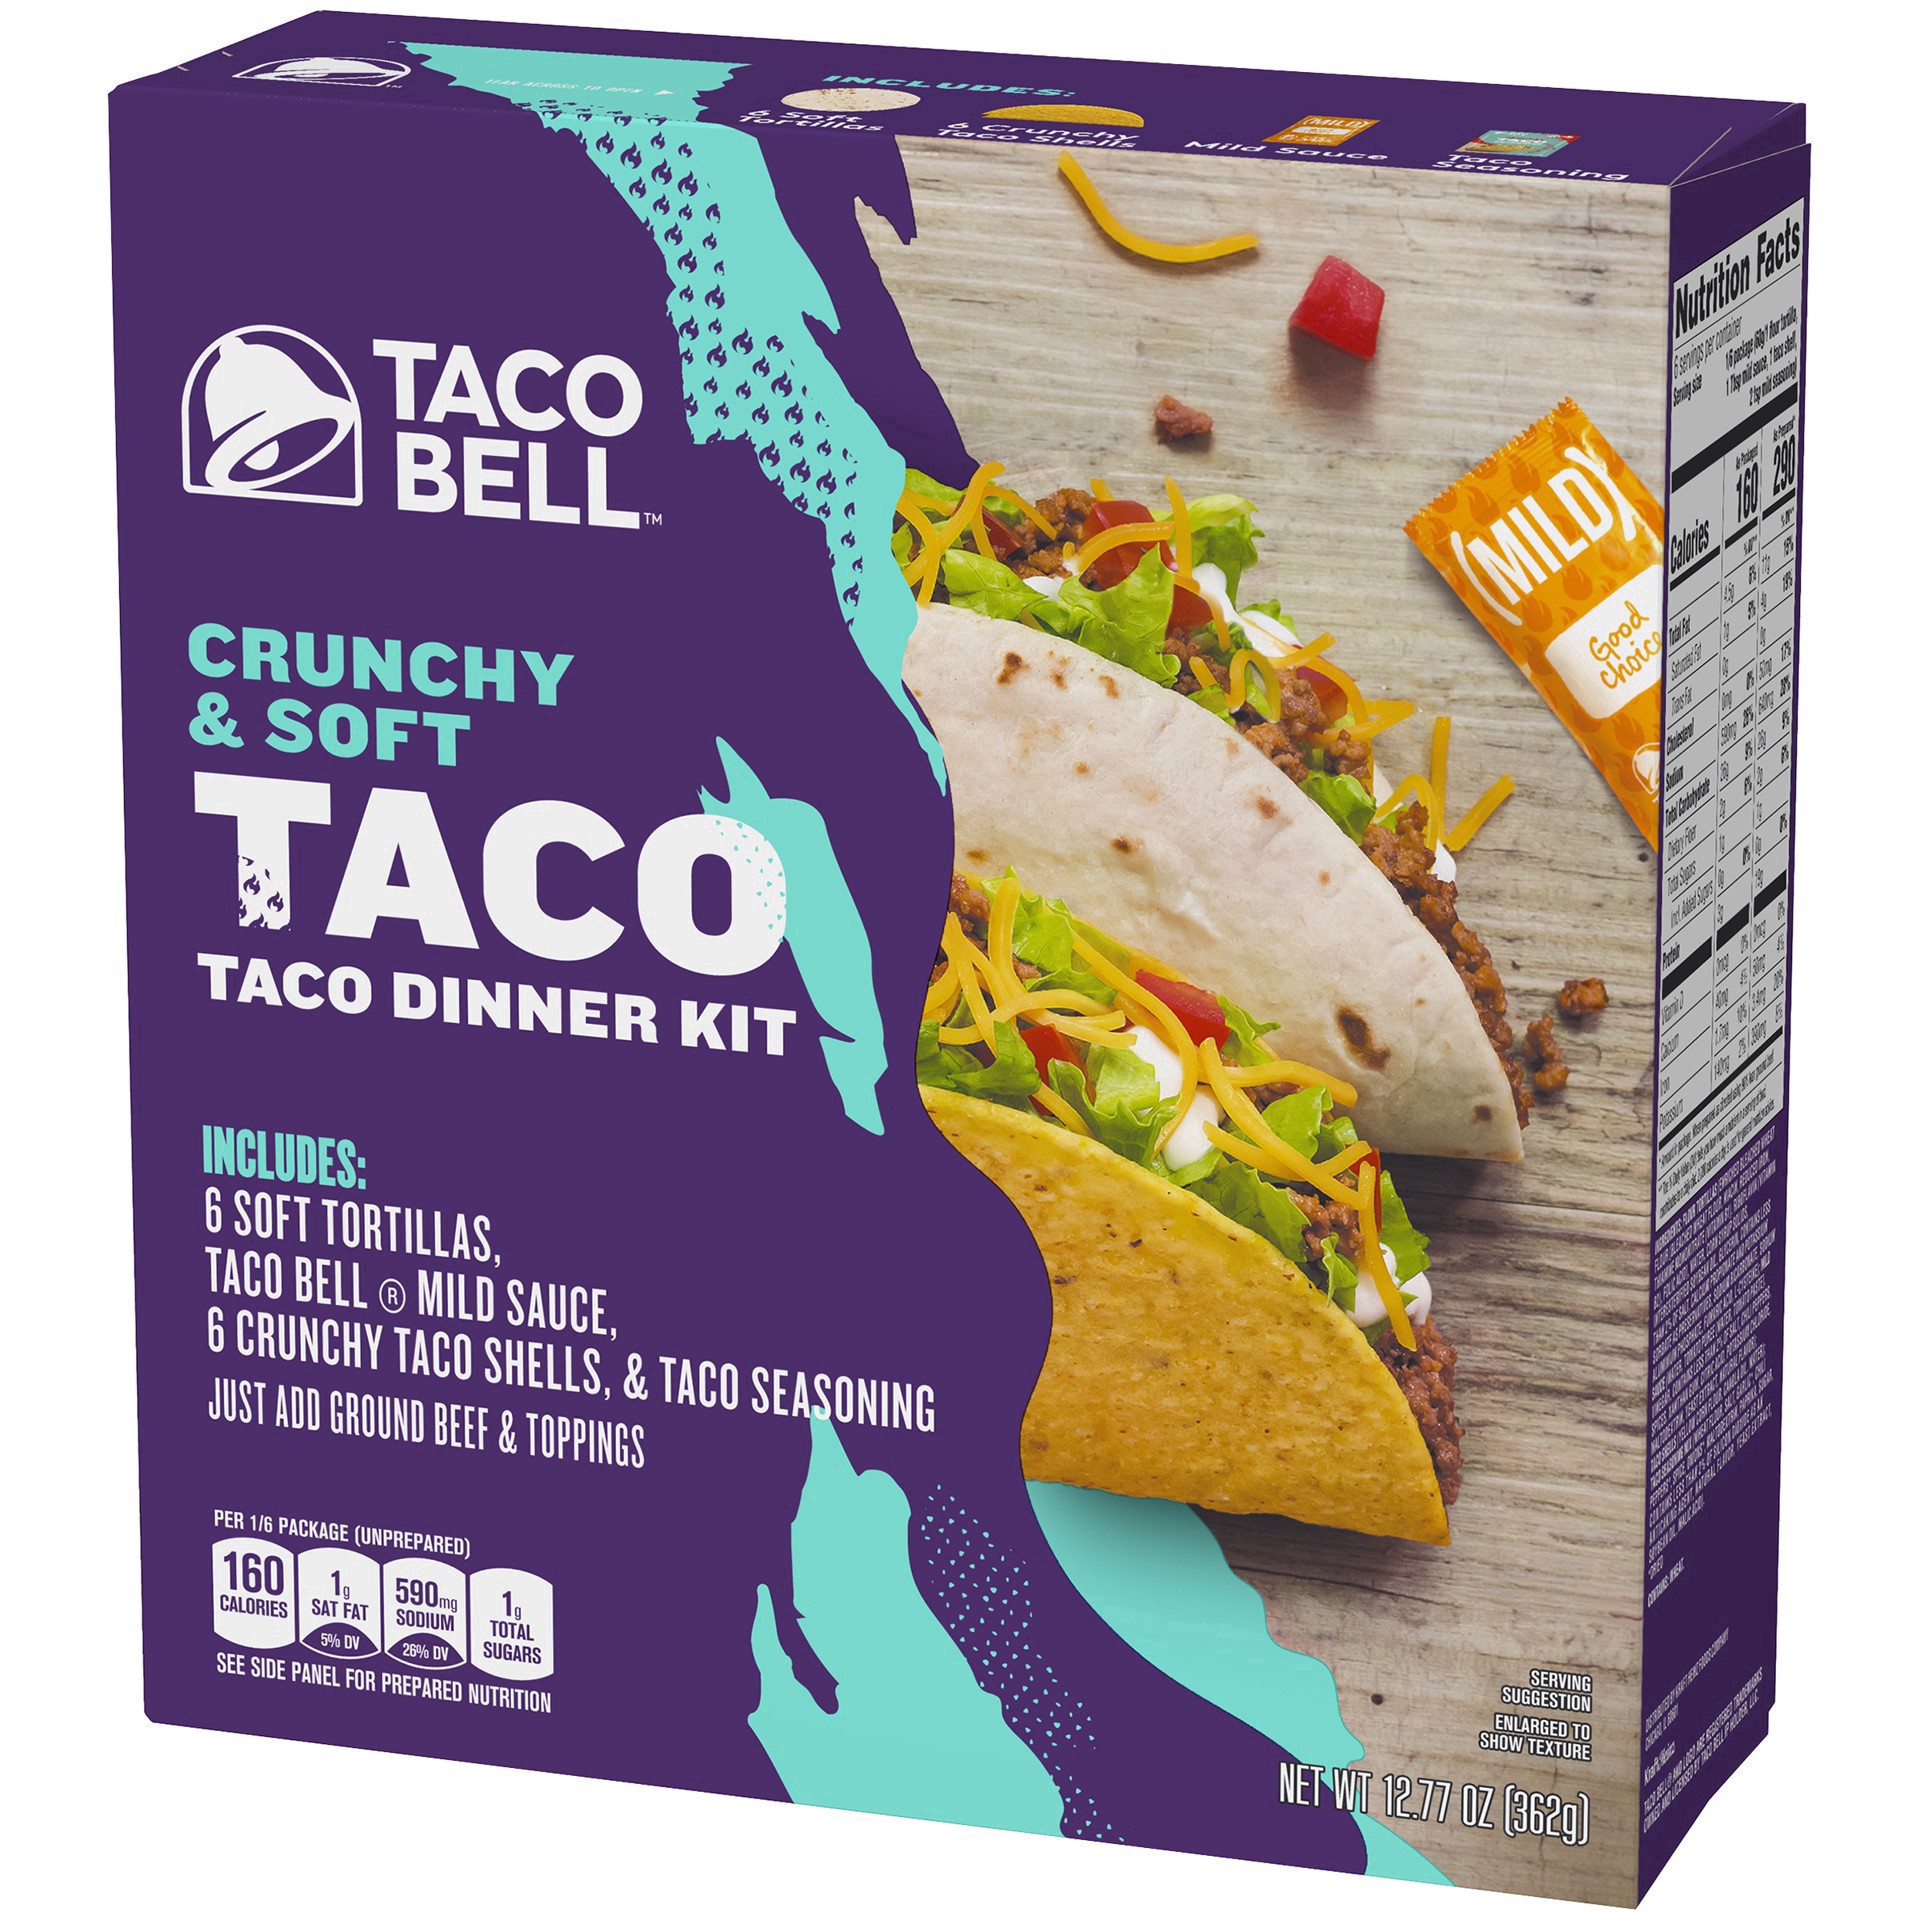 slide 81 of 101, Taco Bell Crunchy & Soft Taco Cravings Kit with 6 Soft Tortillas, 6 Crunchy Taco Shells, Taco Bell Mild Sauce & Seasoning, 12.77 oz Box, 1 ea